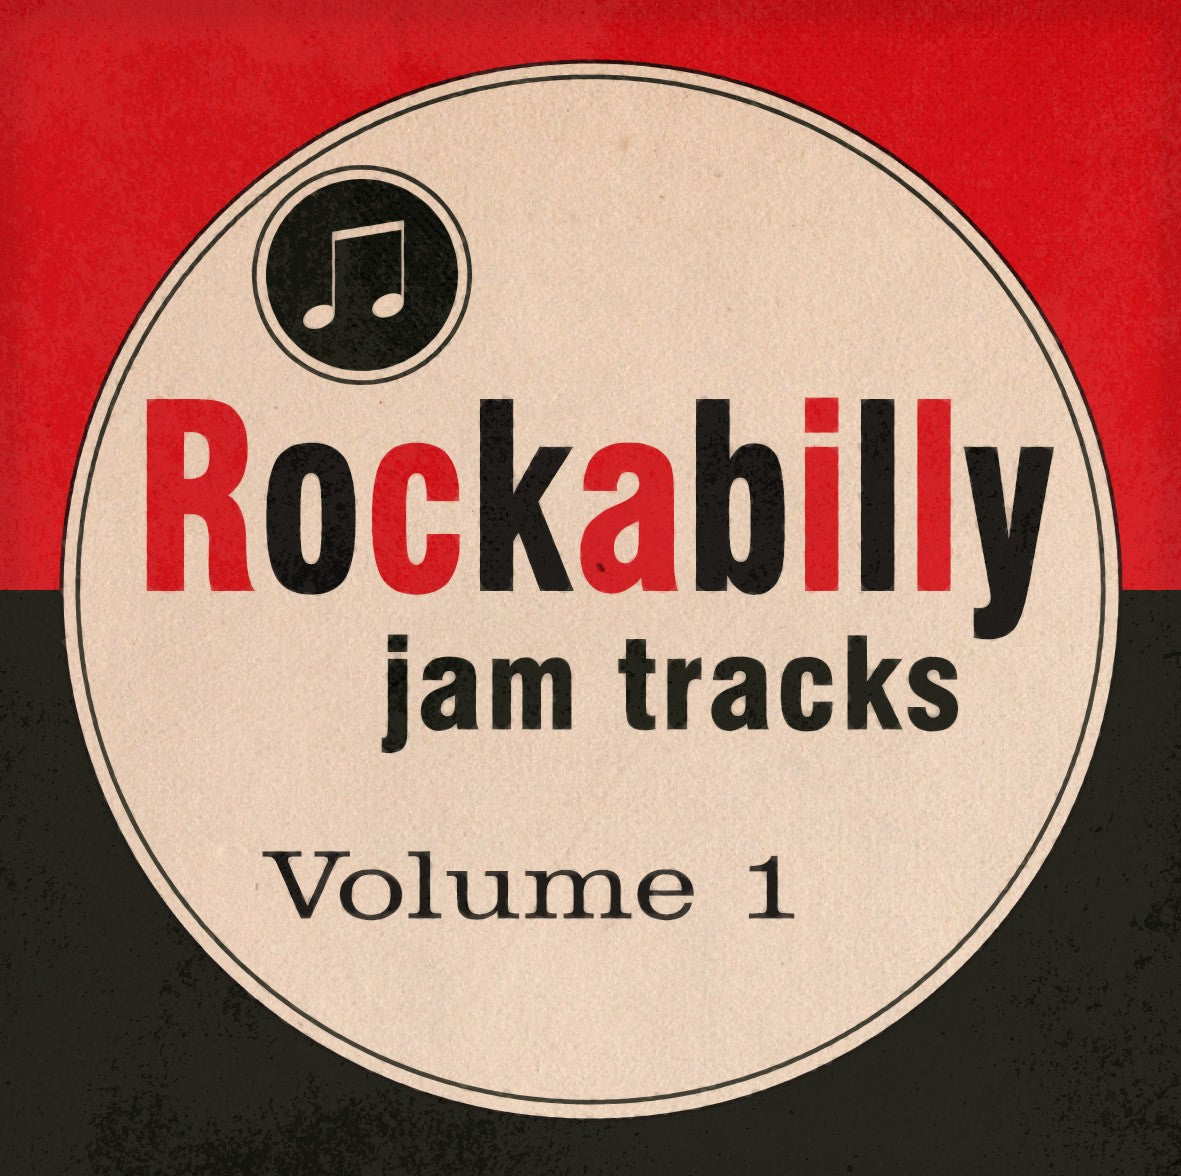 Rockabilly Jam Tracks Vol. 1